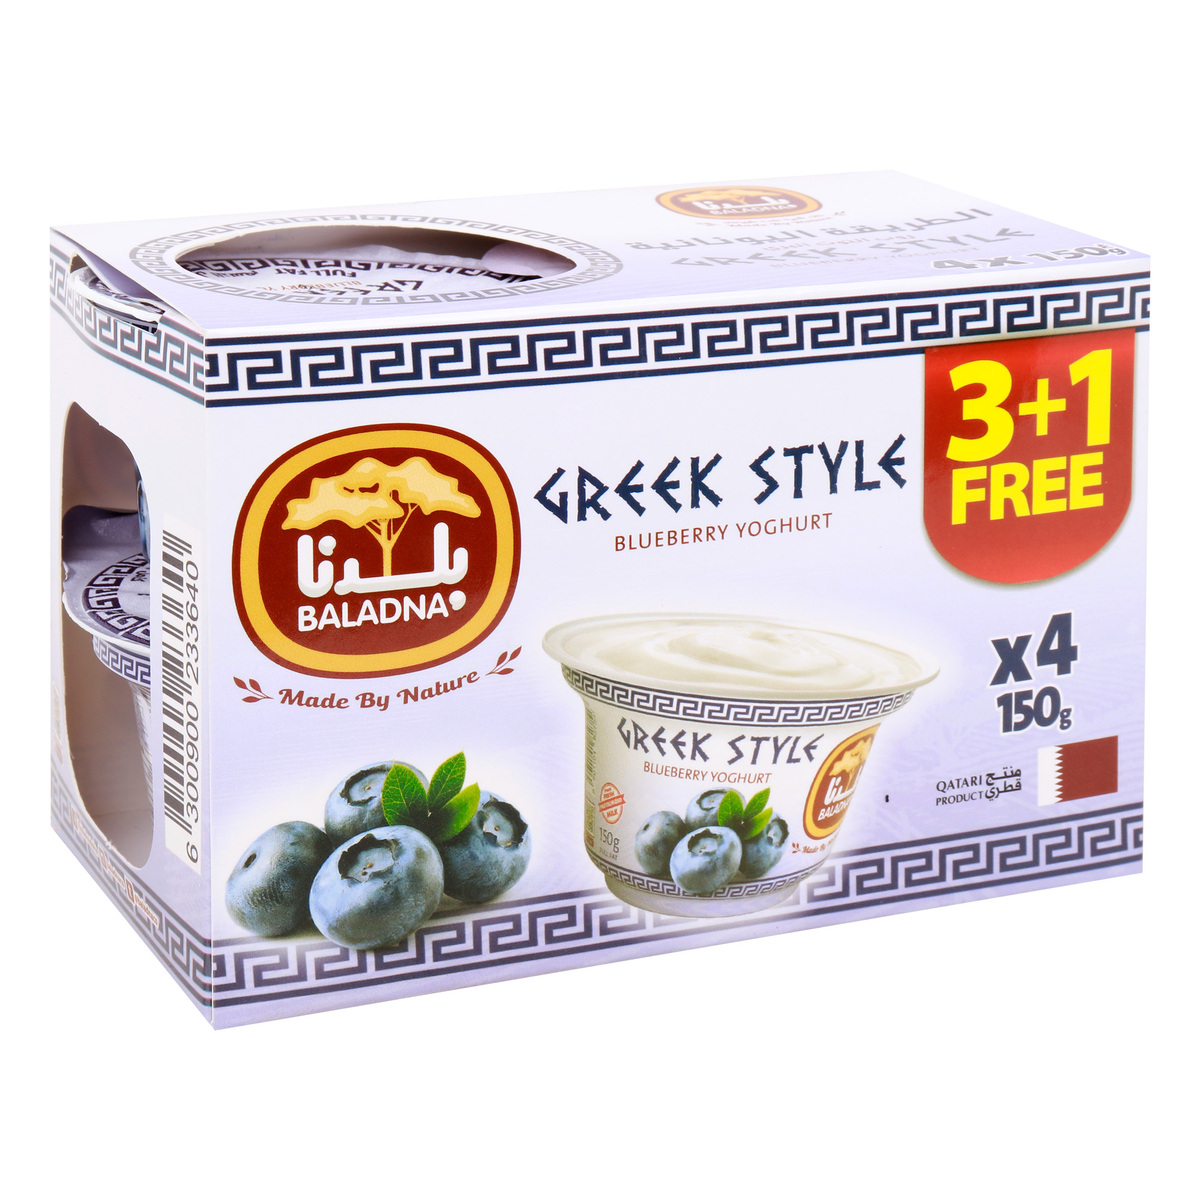 Baladna Greek Style Blueberry Yoghurt 150 g 3+1